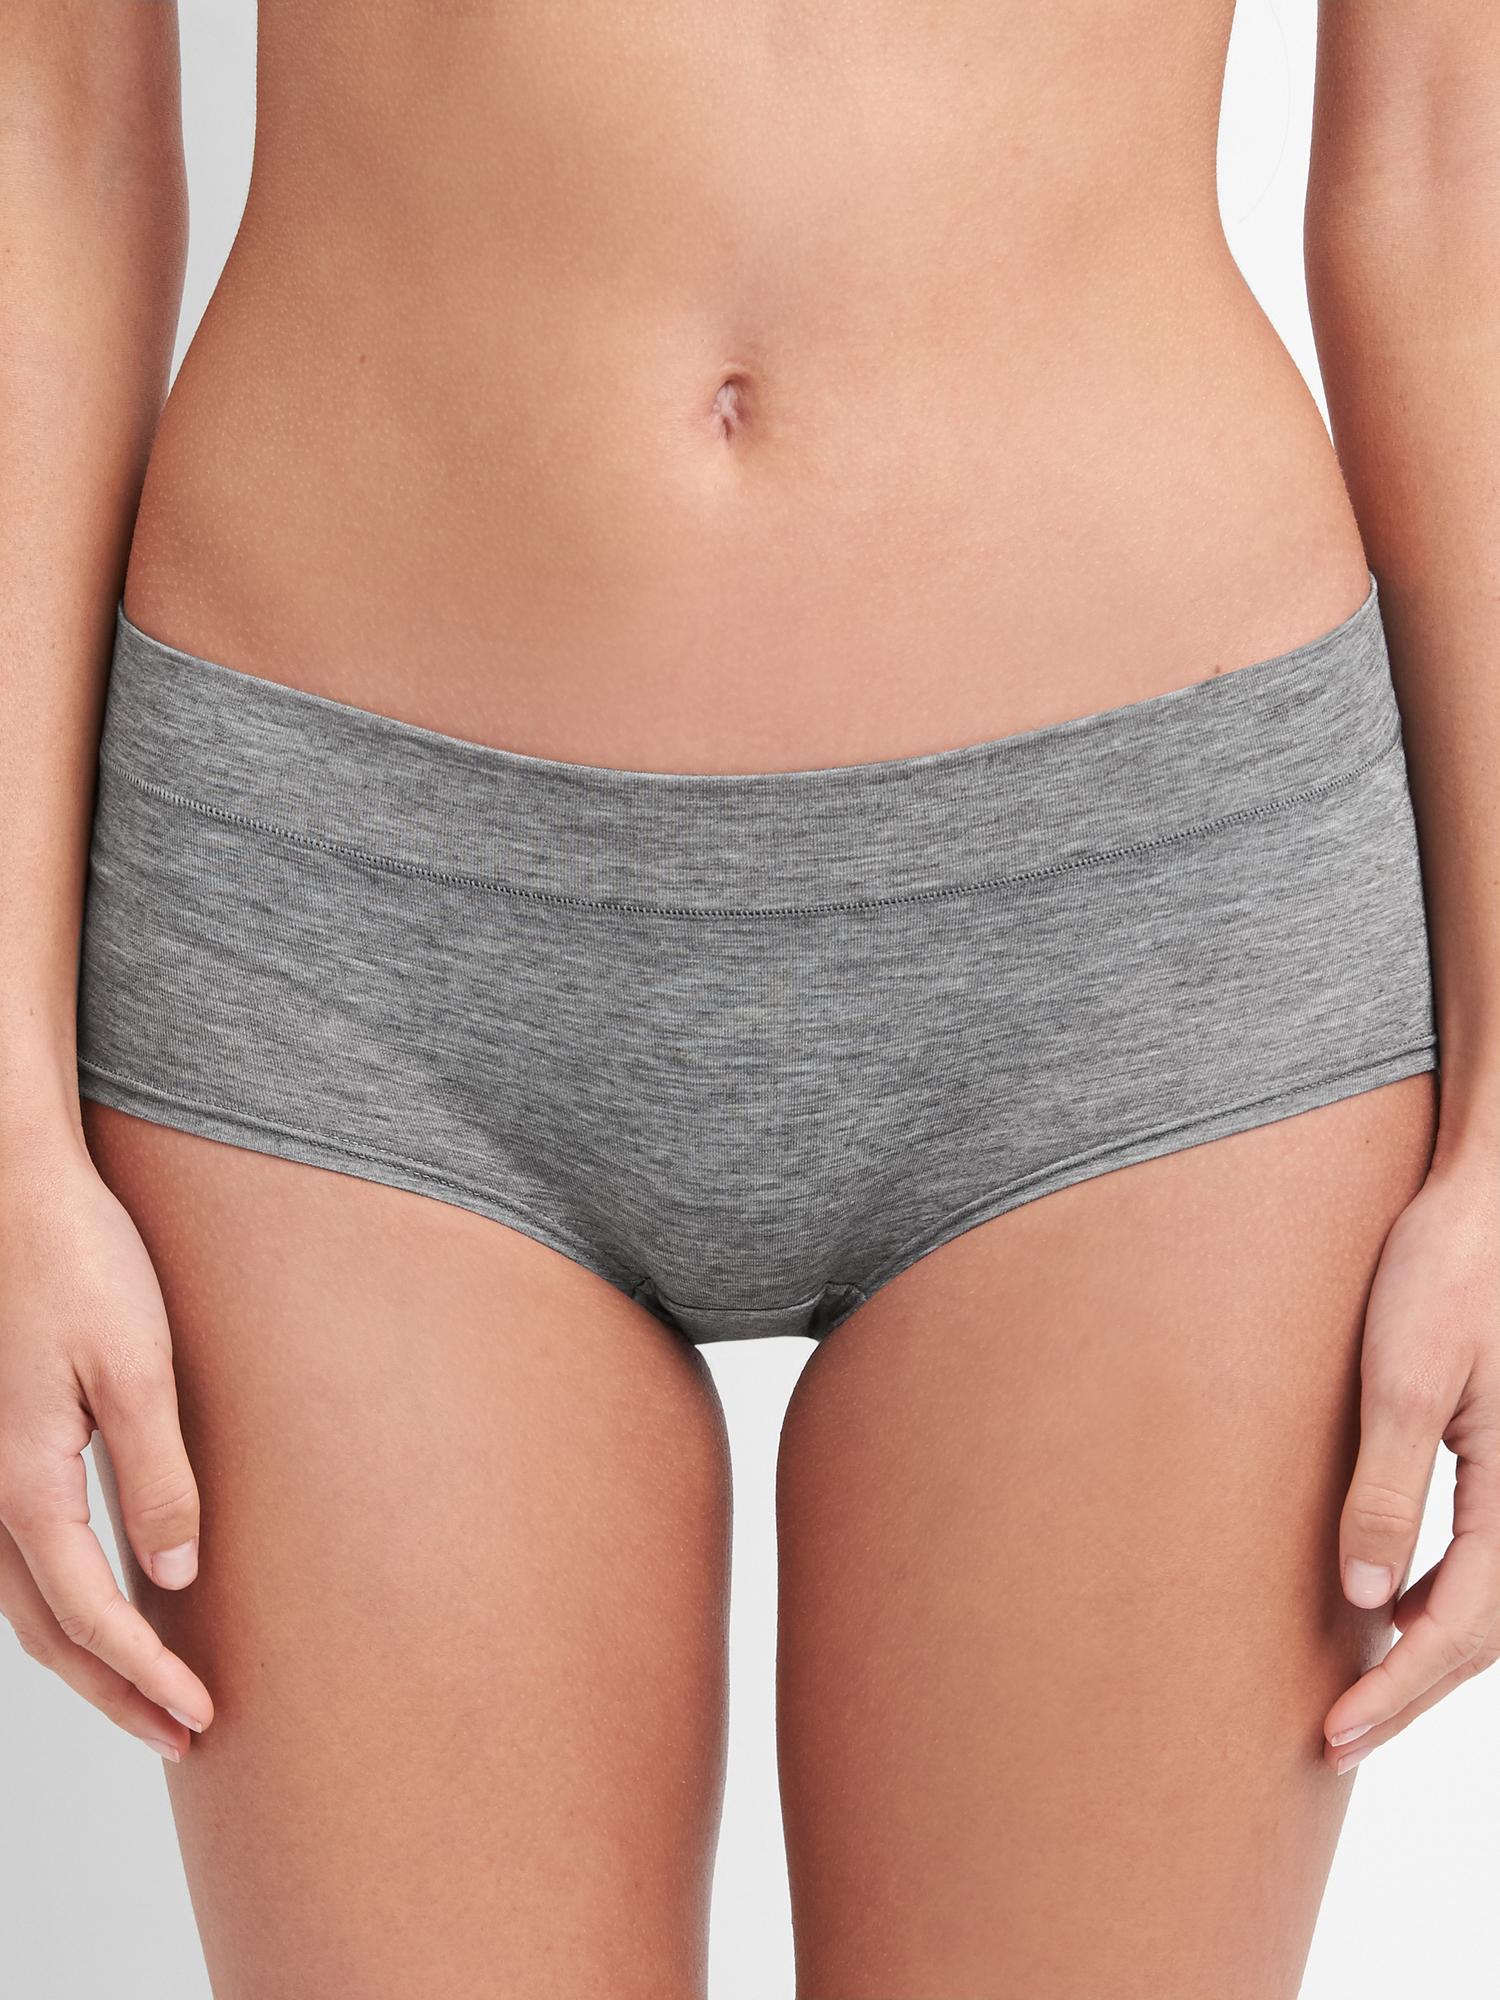 Gap Body Womens Tan Breath Shorty Panties Size Large - beyond exchange